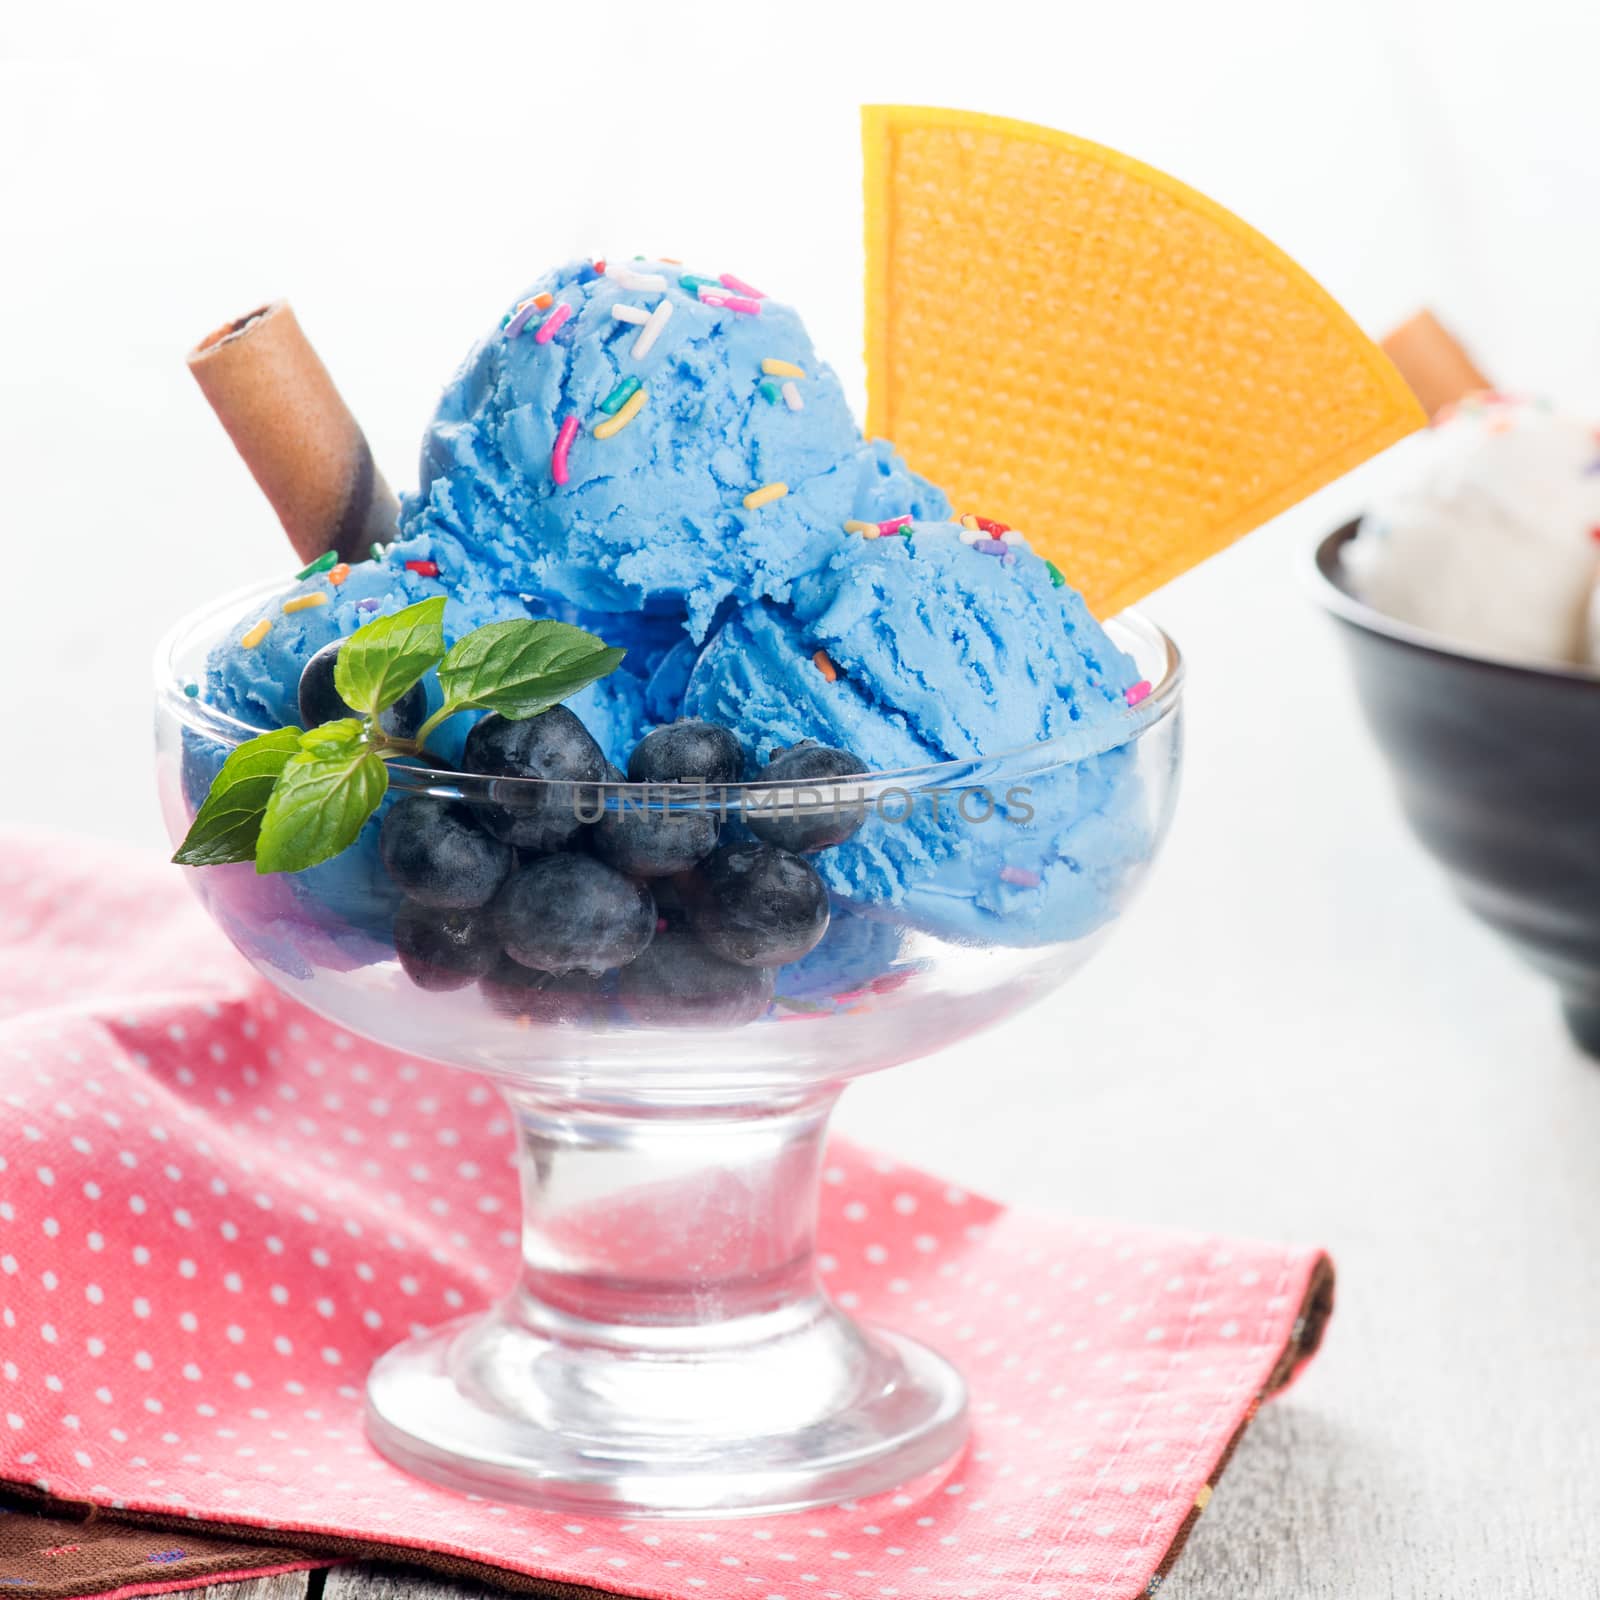 Blueberry ice cream bowl by szefei